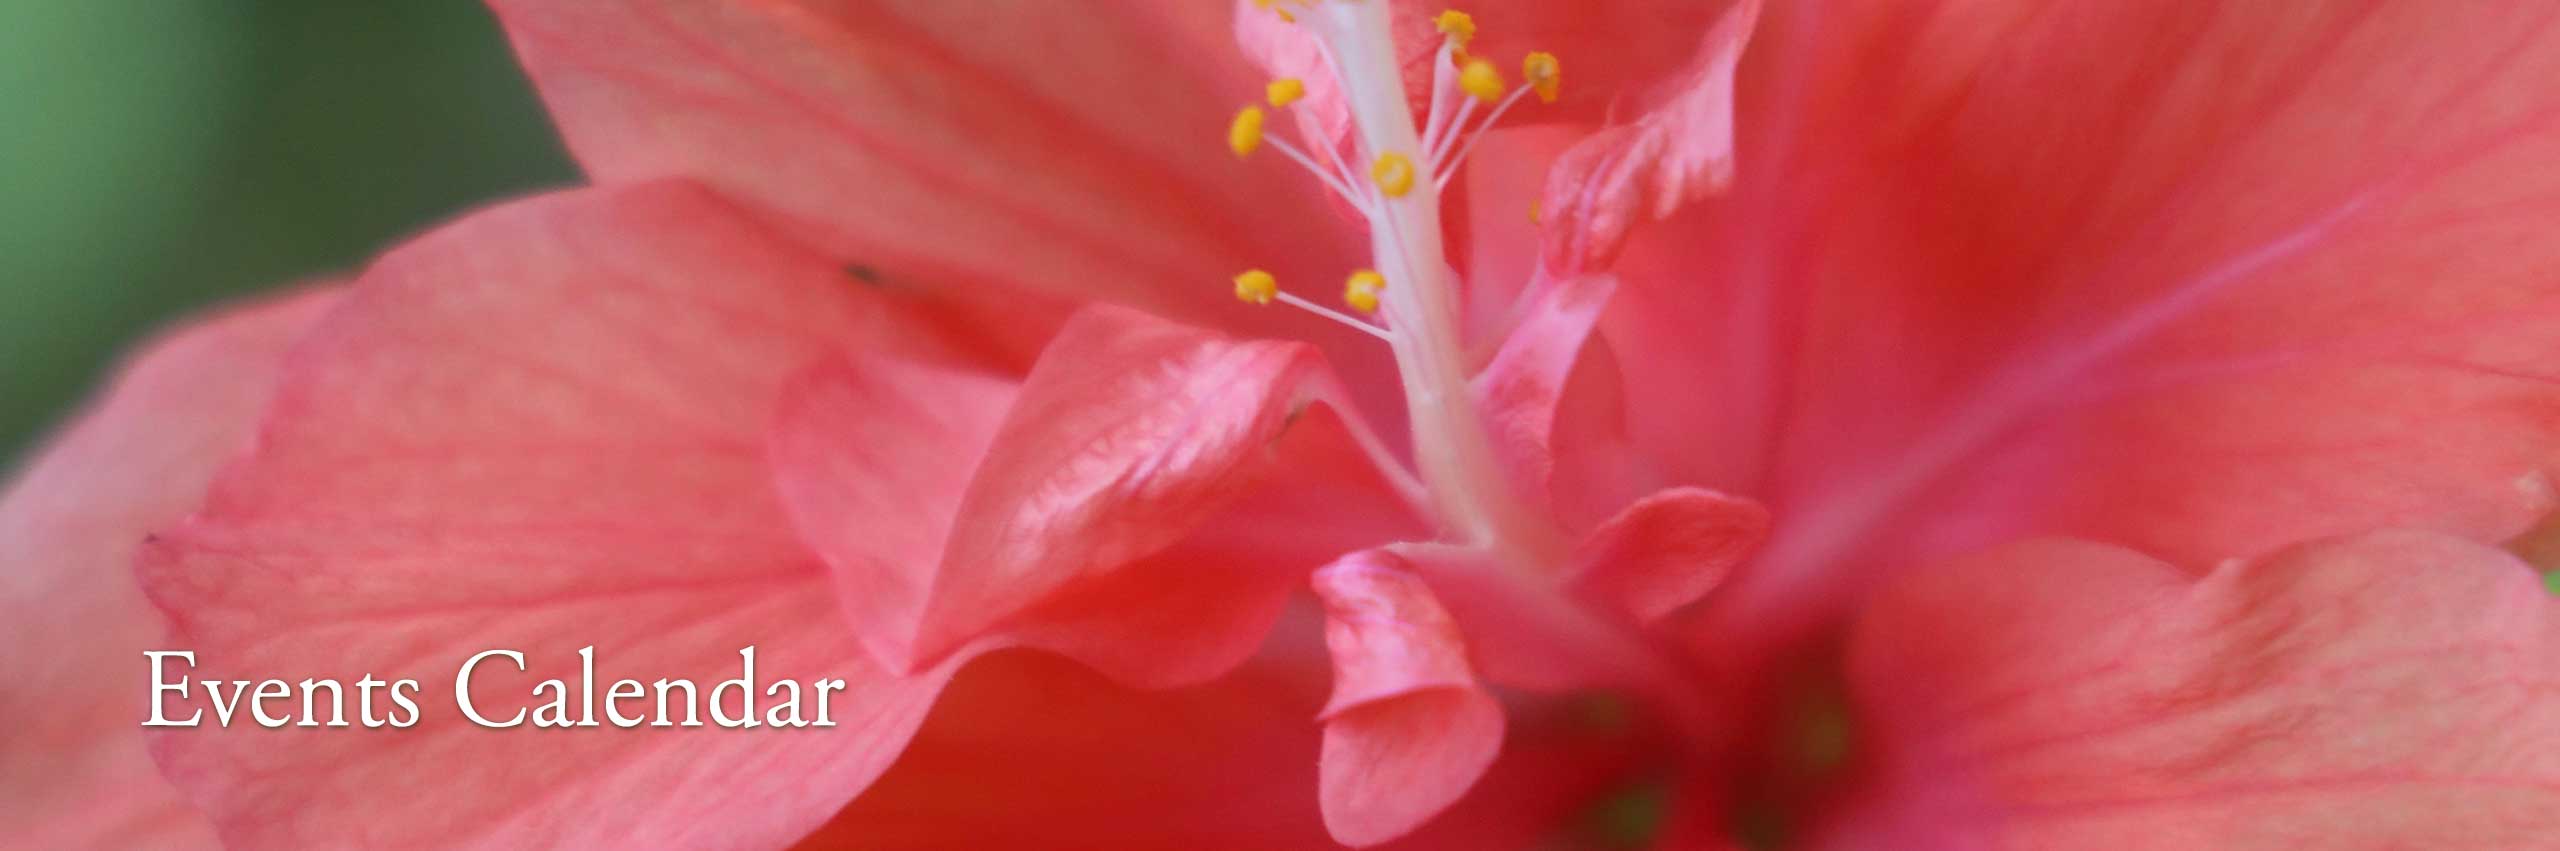 banner-events-calendar-hibiscus